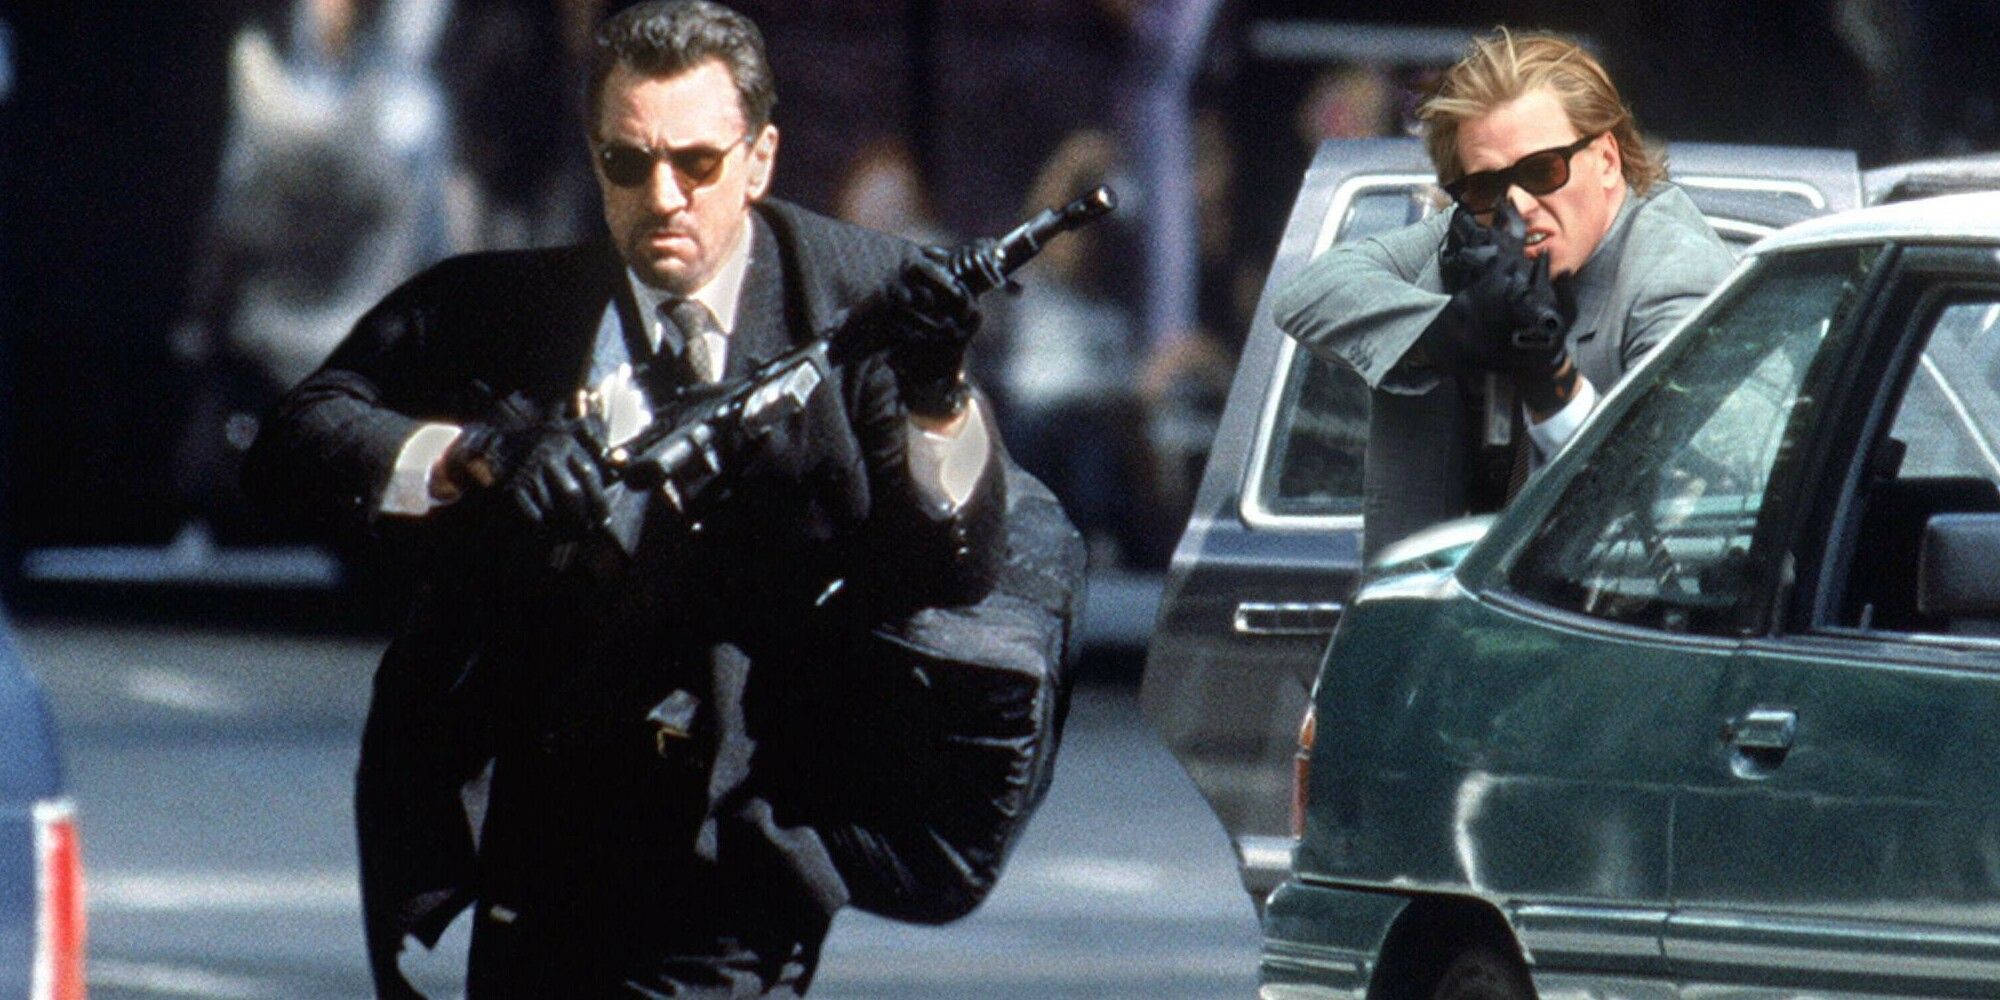 Robert De Niro and Val Kilmer with guns in the street in Heat (1995)